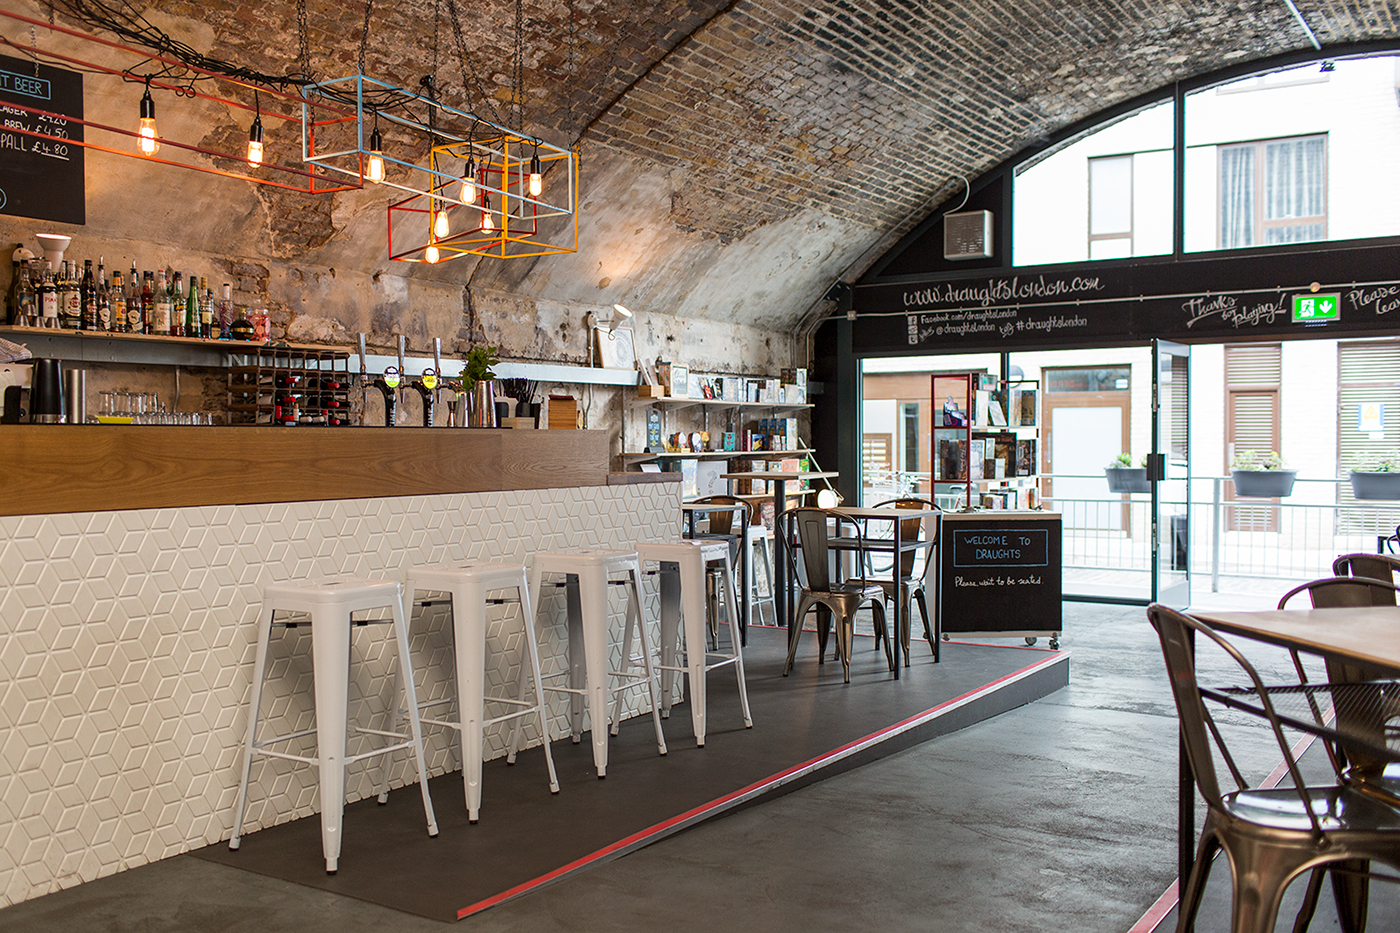 Draughts London Board game cafe Kickstarter minimalistic architecture